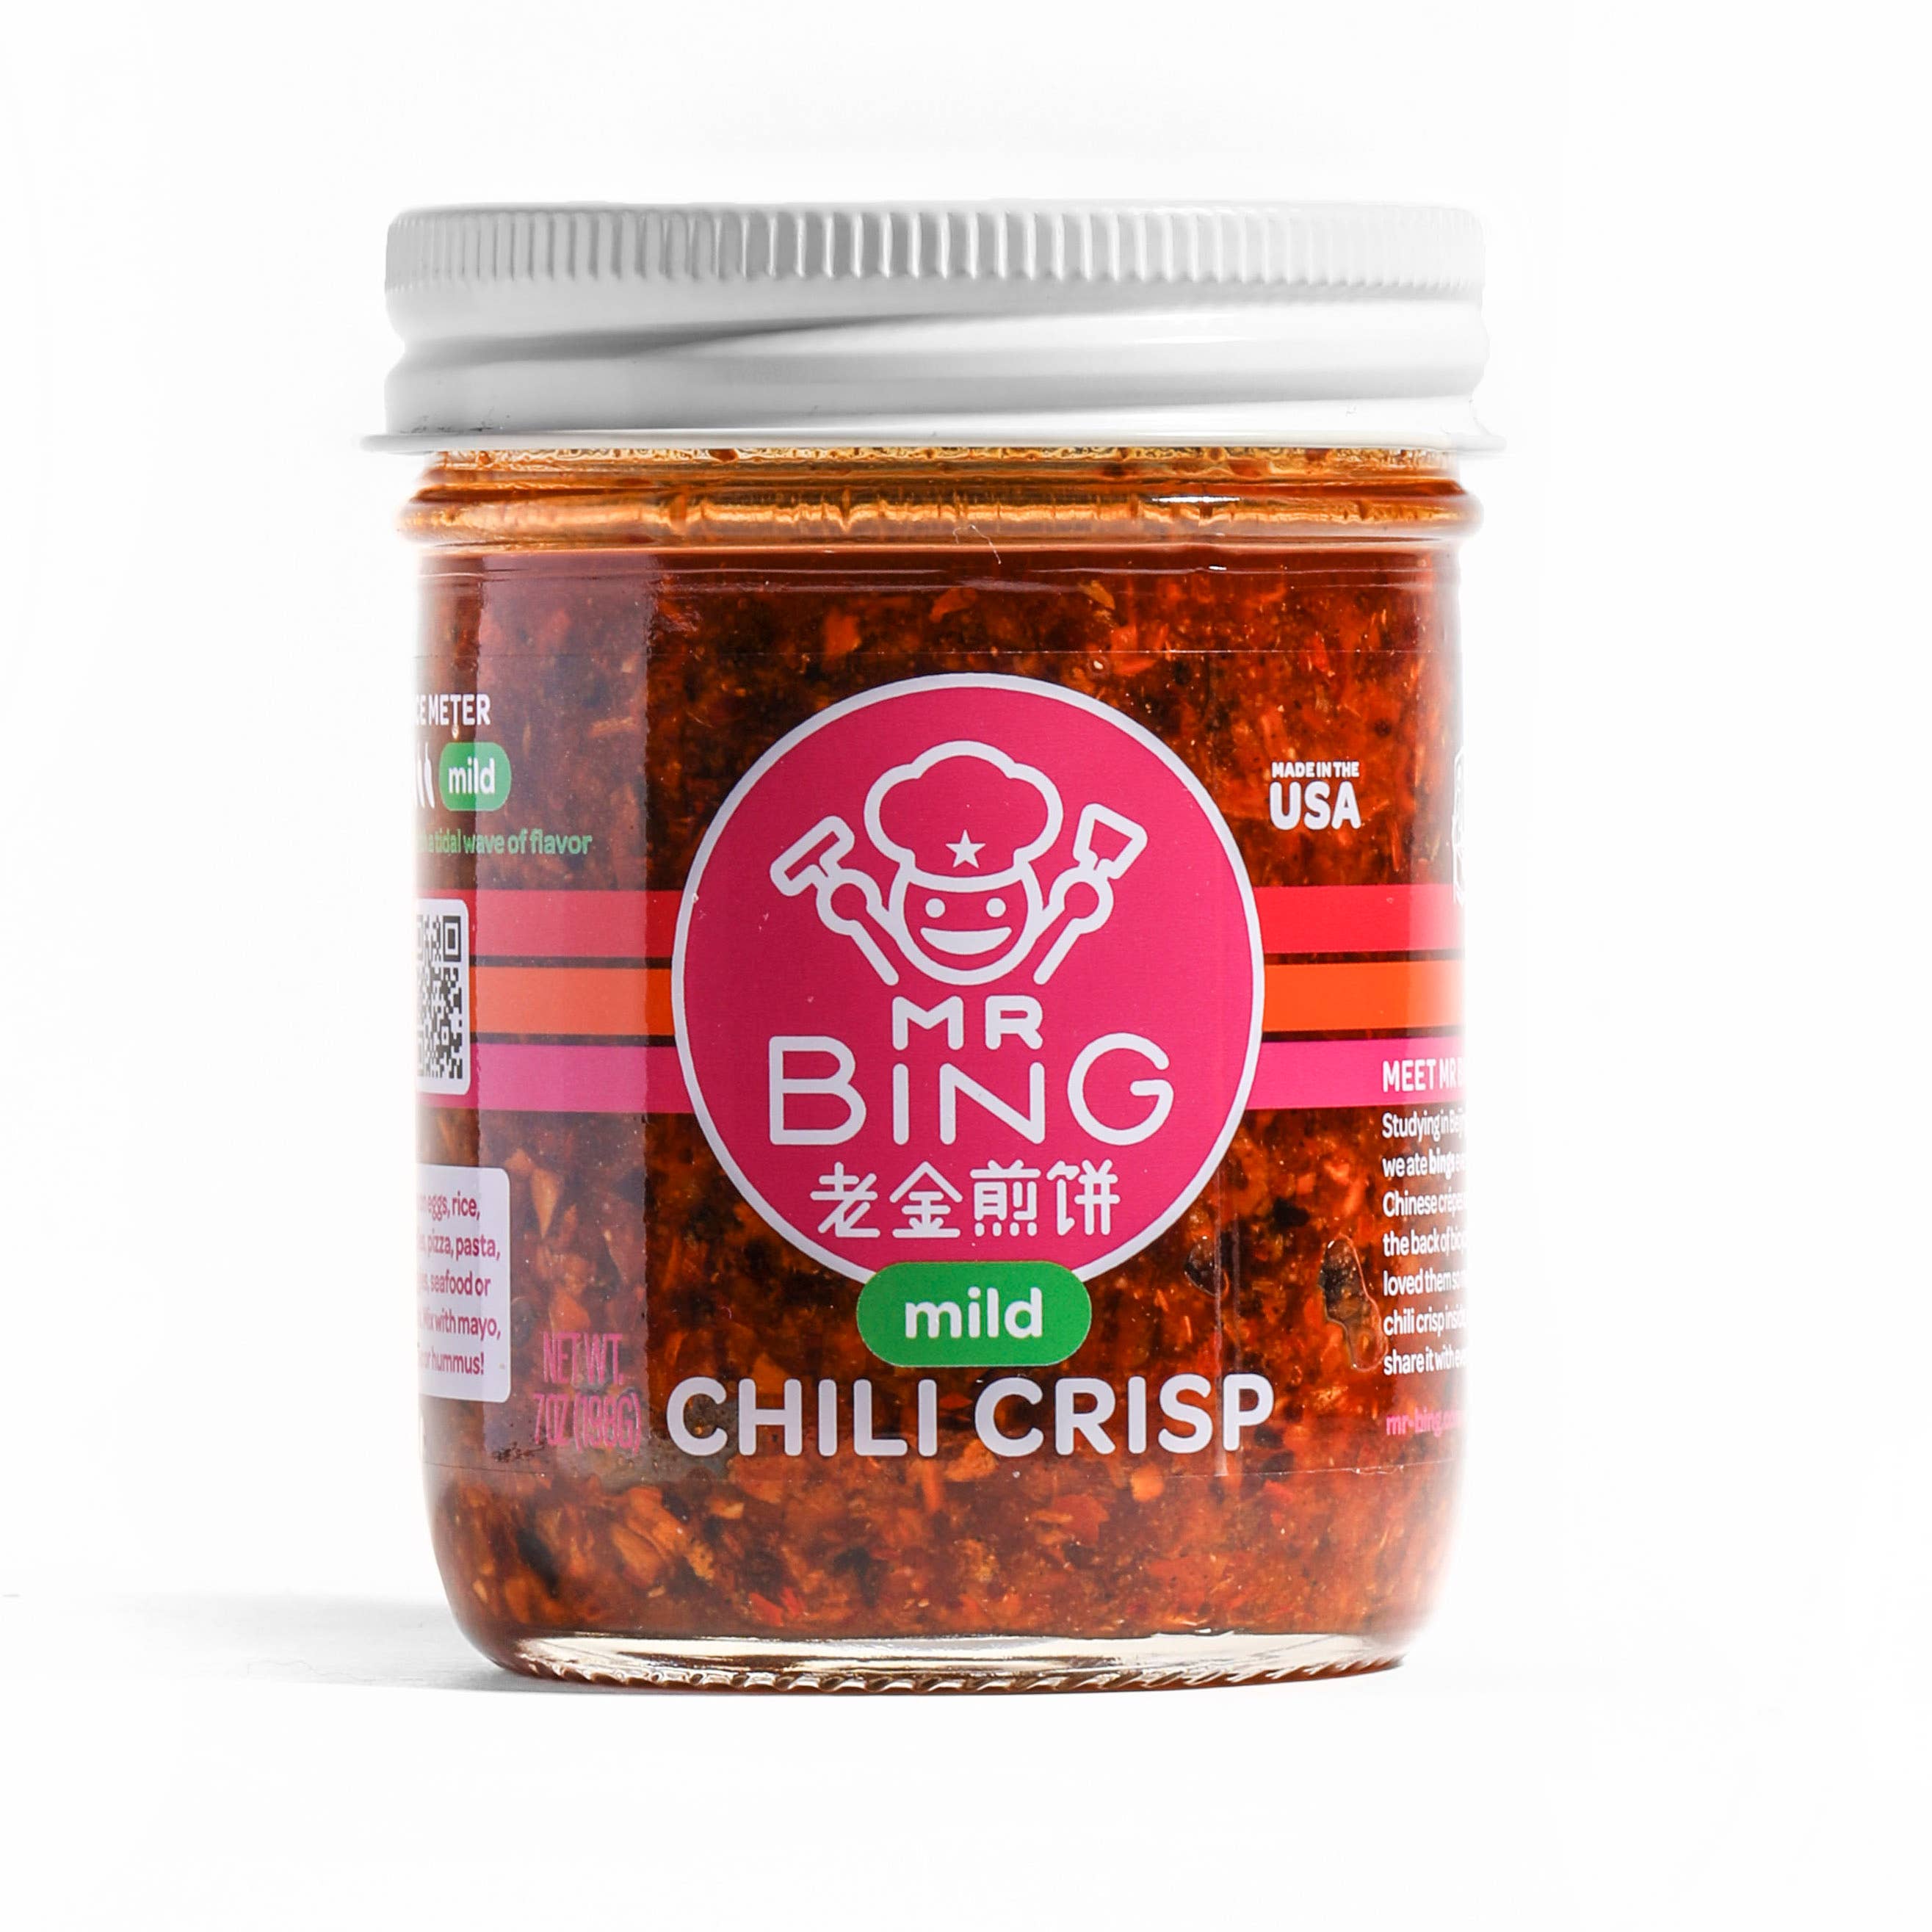 MR BING FOODS - Mr Bing Chili Crisp |  7 oz Original Mild